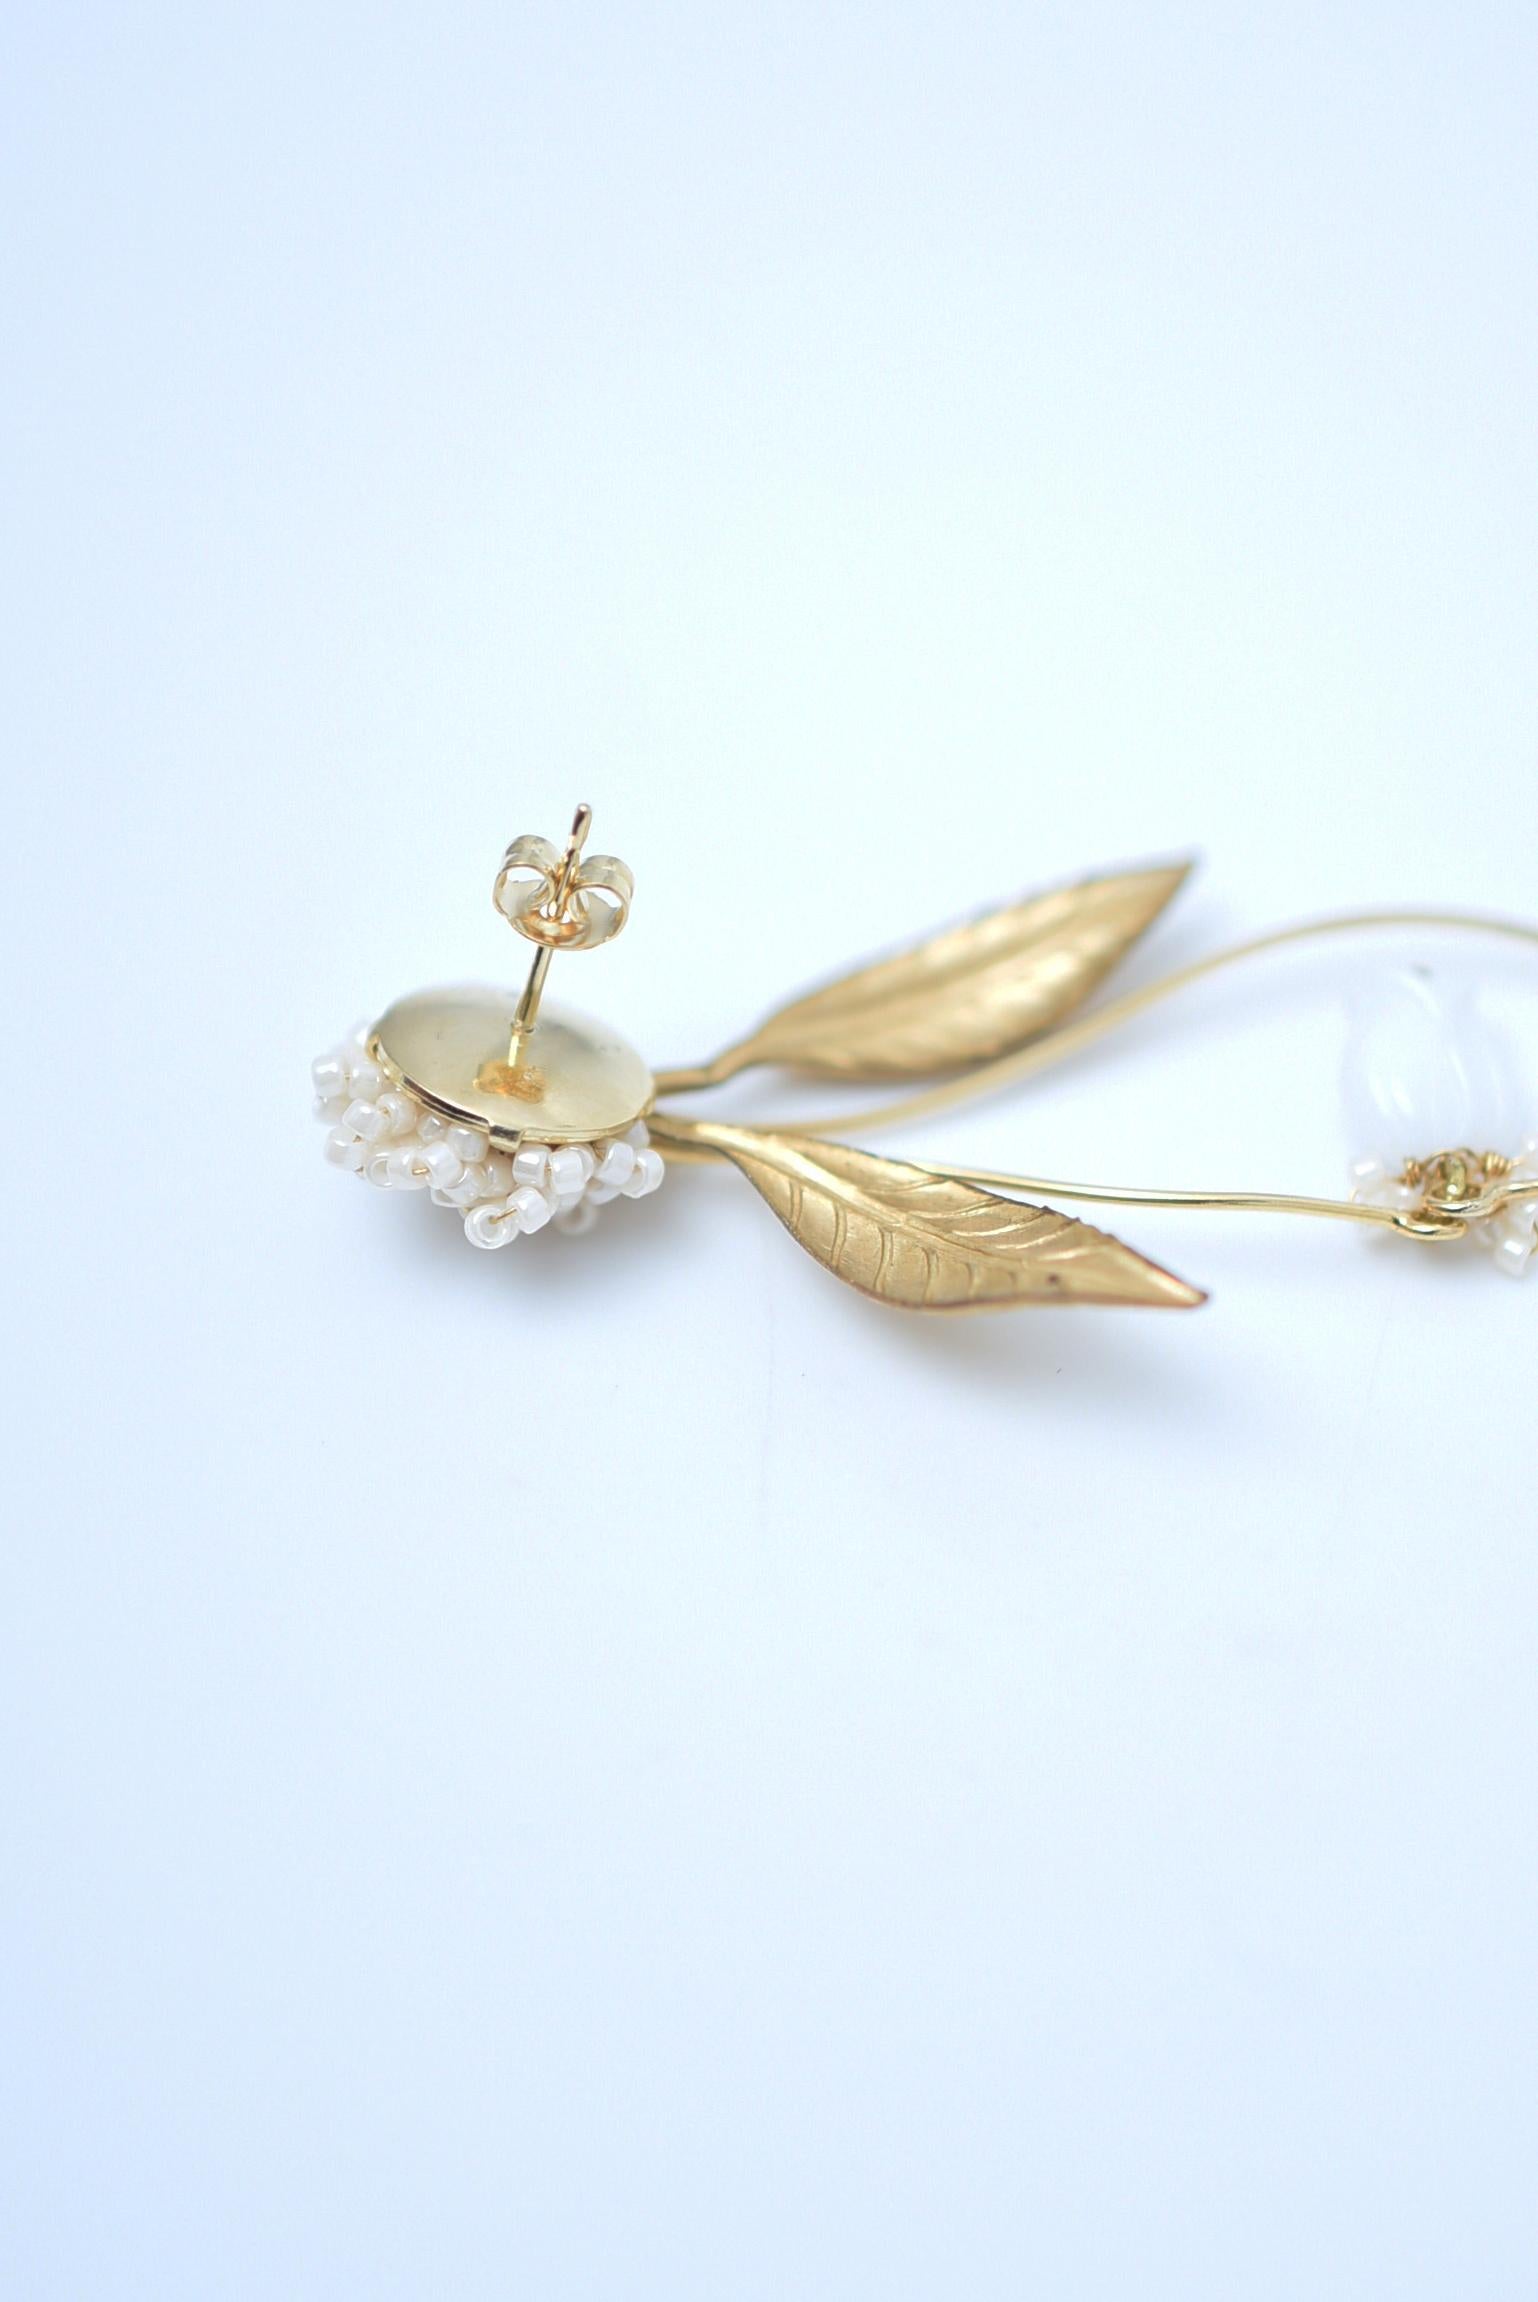 Artisan suzuran bouquet earring / vintage jewelry , 1970's vintage parts For Sale